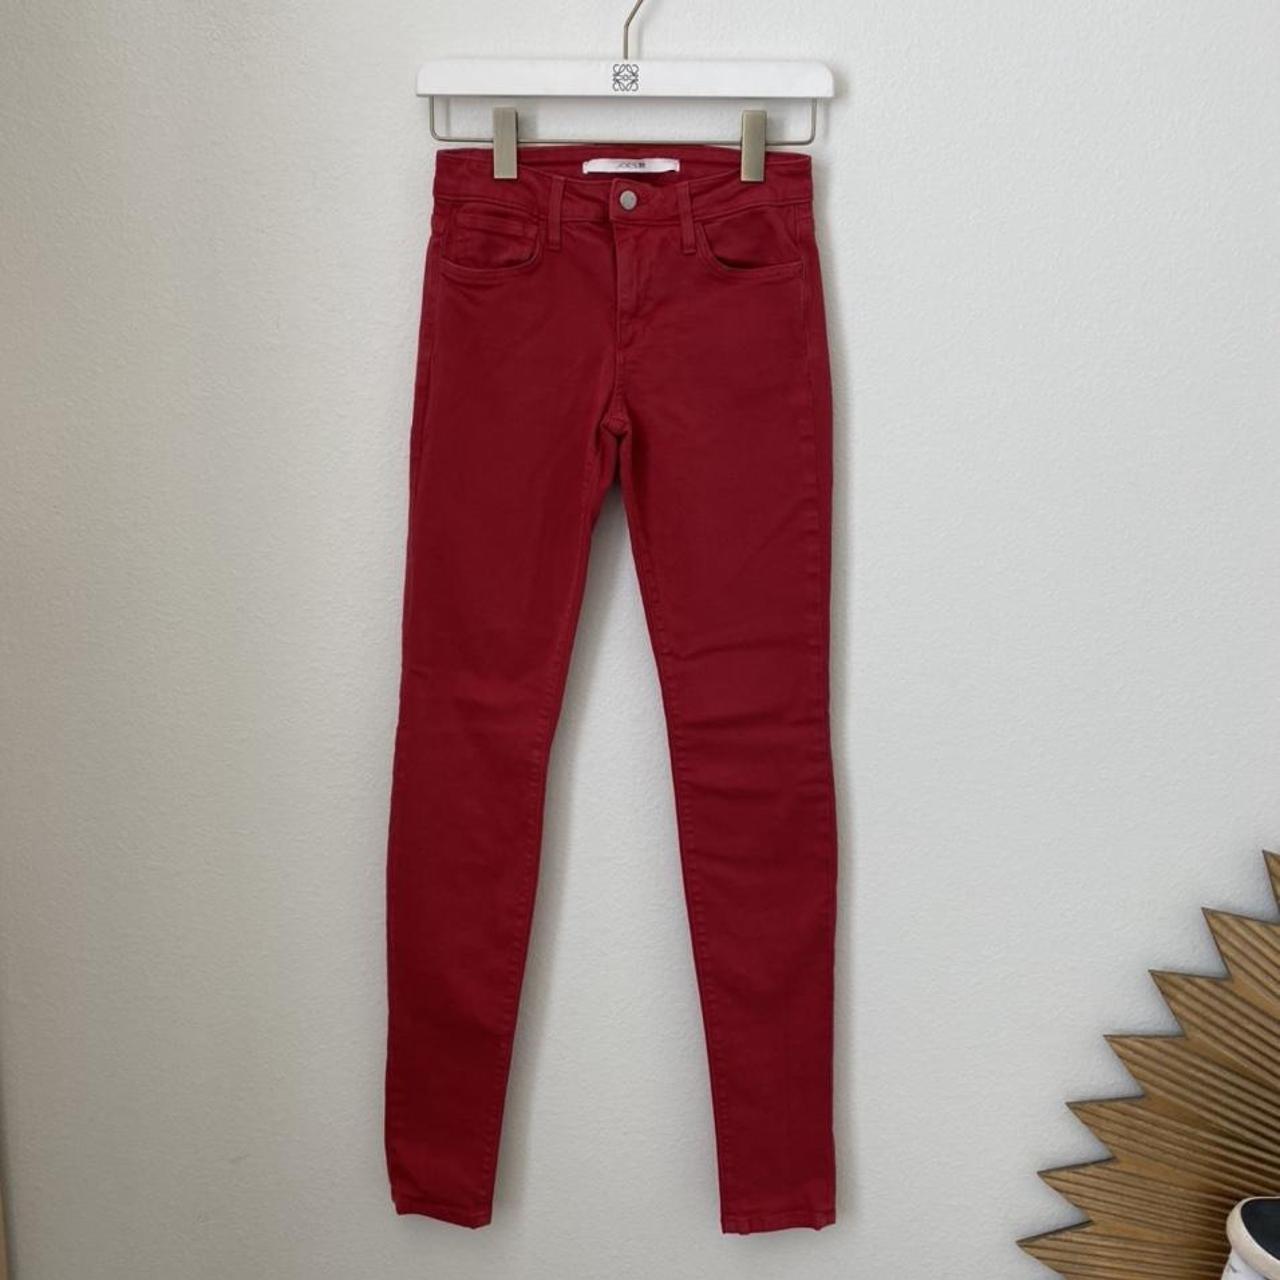 J Brand Red Skinny Jeans